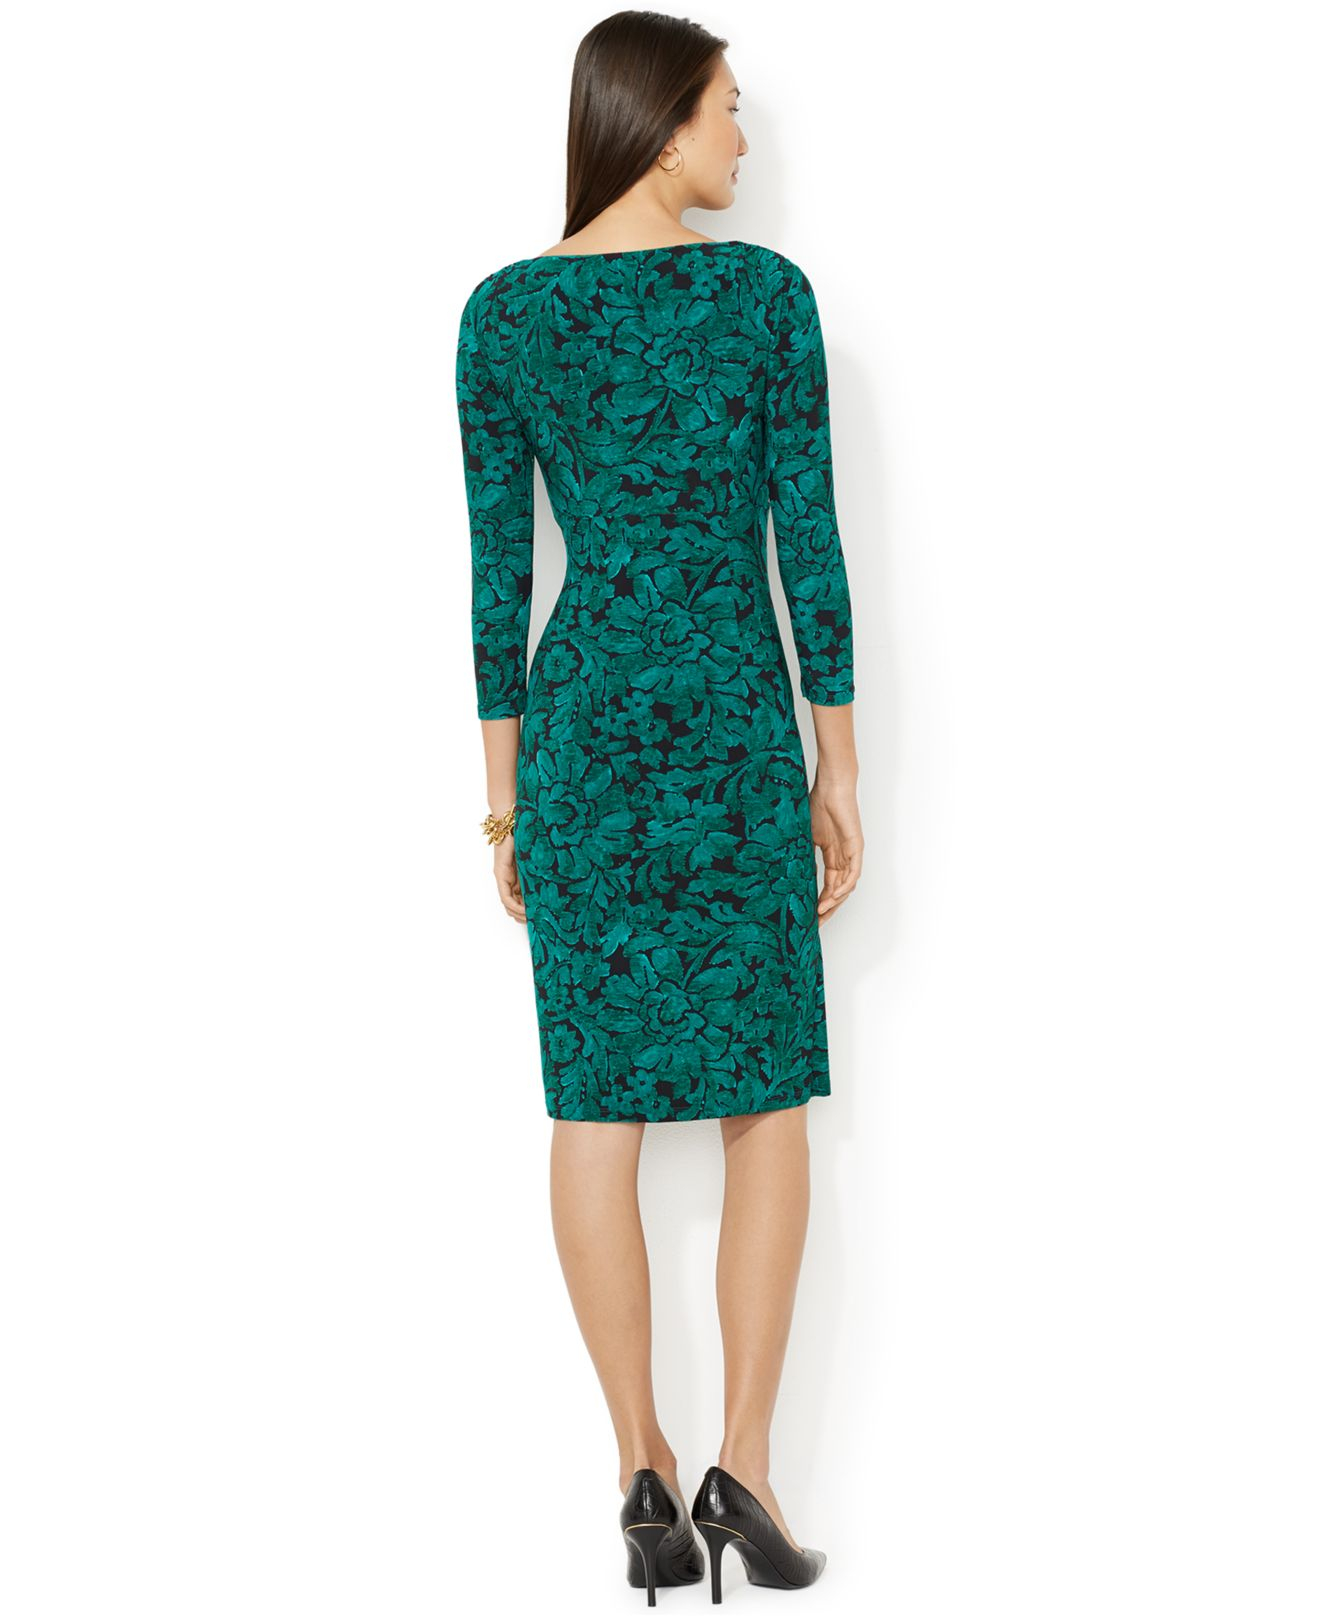 Lauren by Ralph Lauren Floral-Print Faux-Wrap Dress in Green